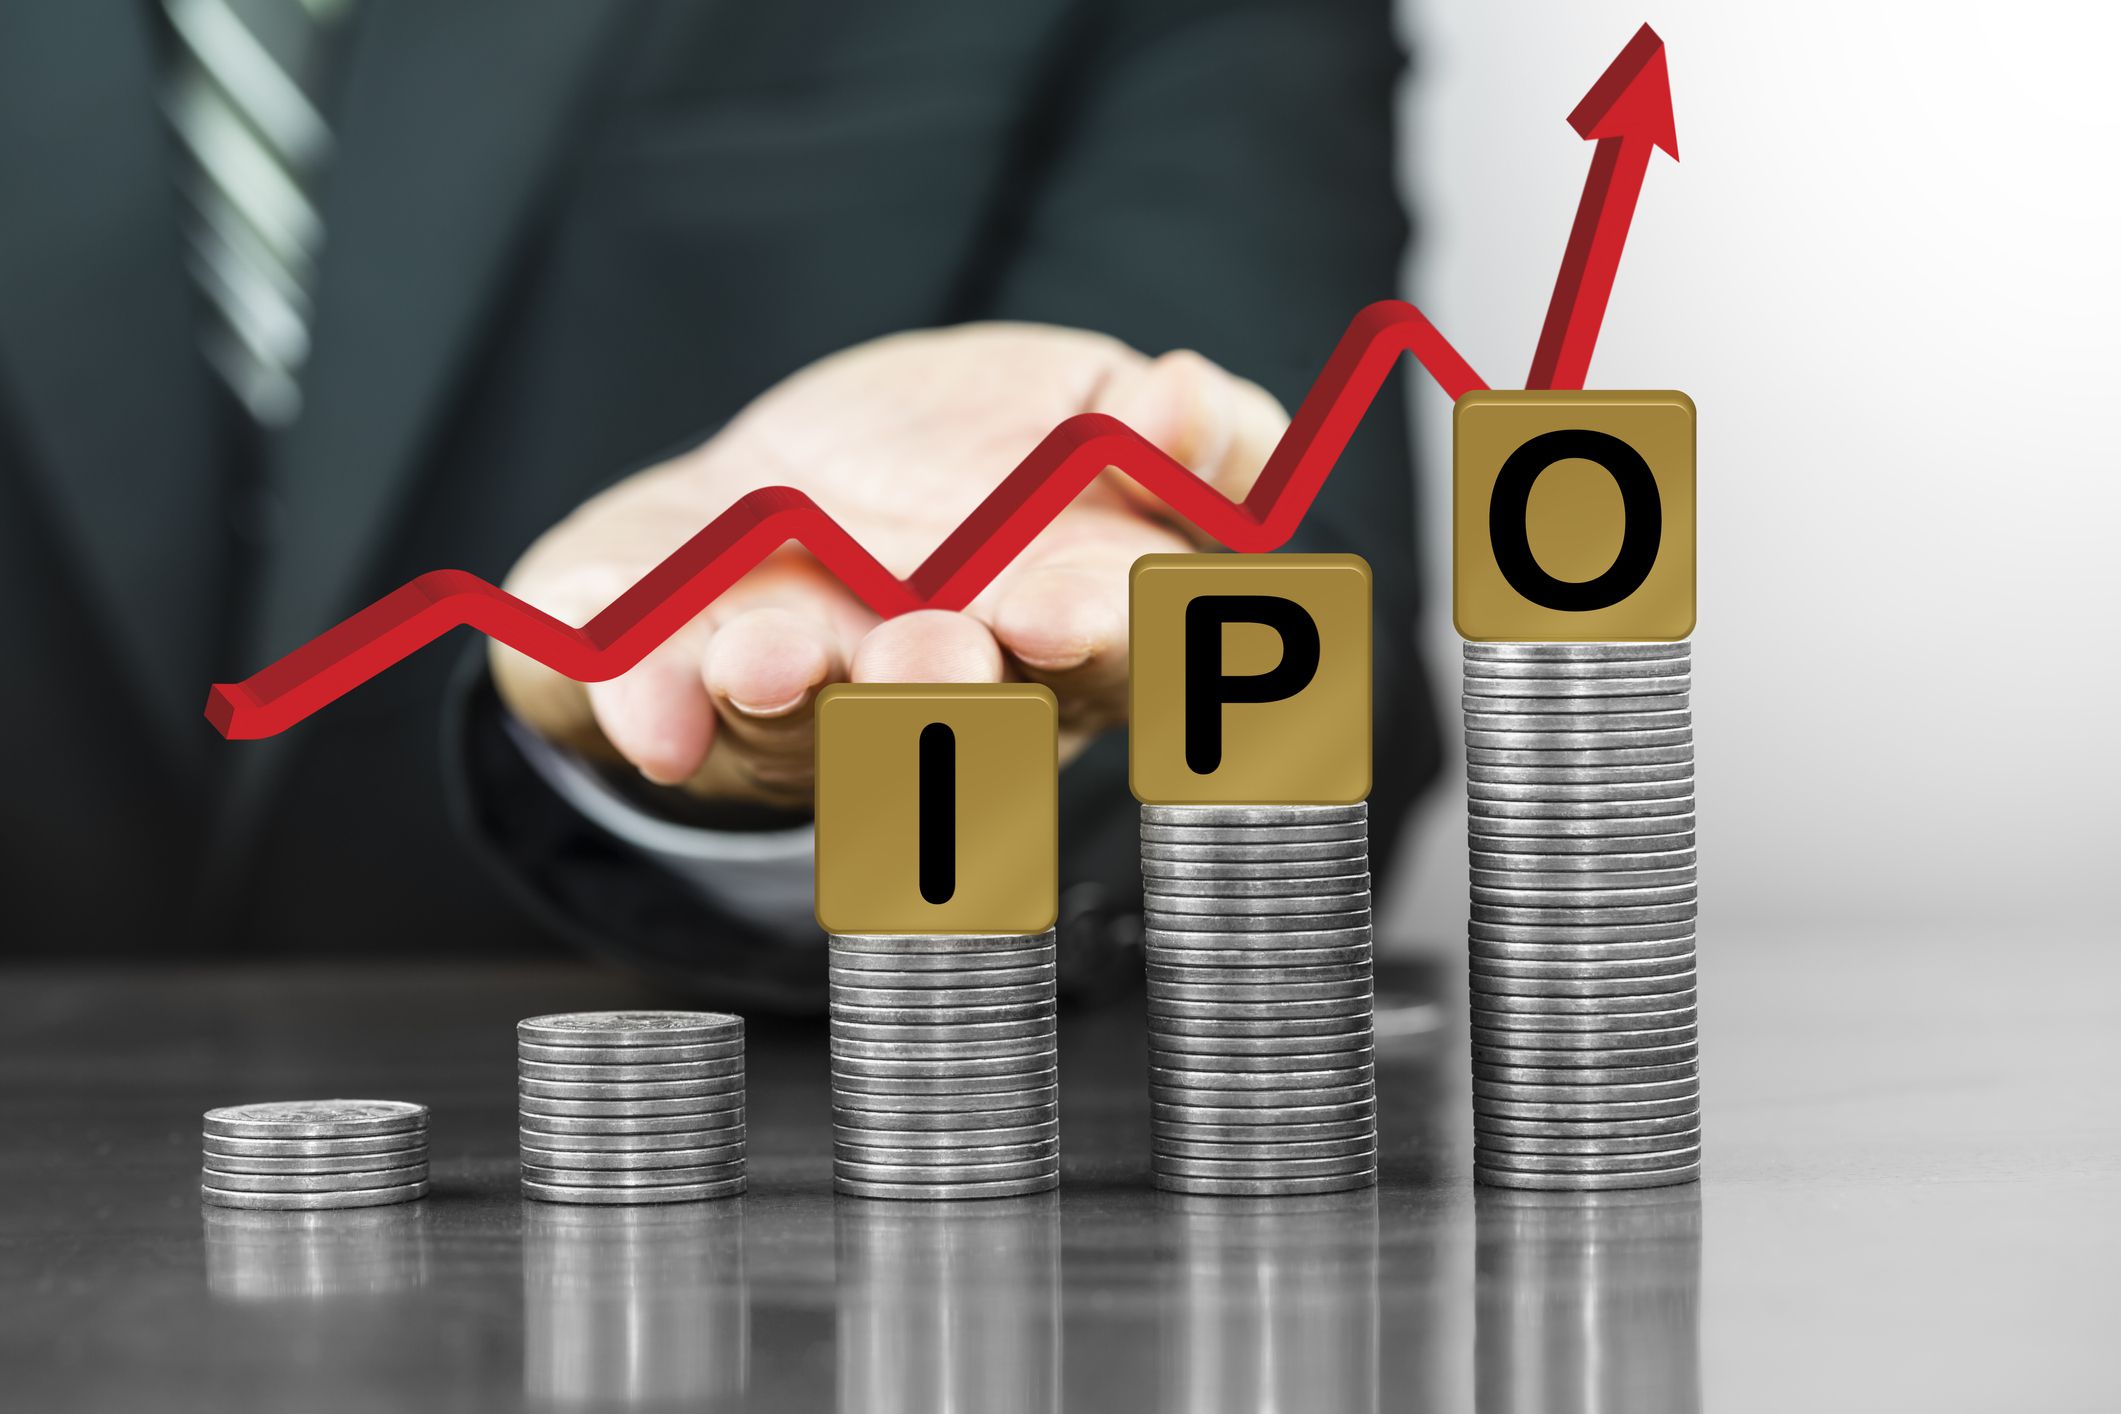 Buy an IPO Stock